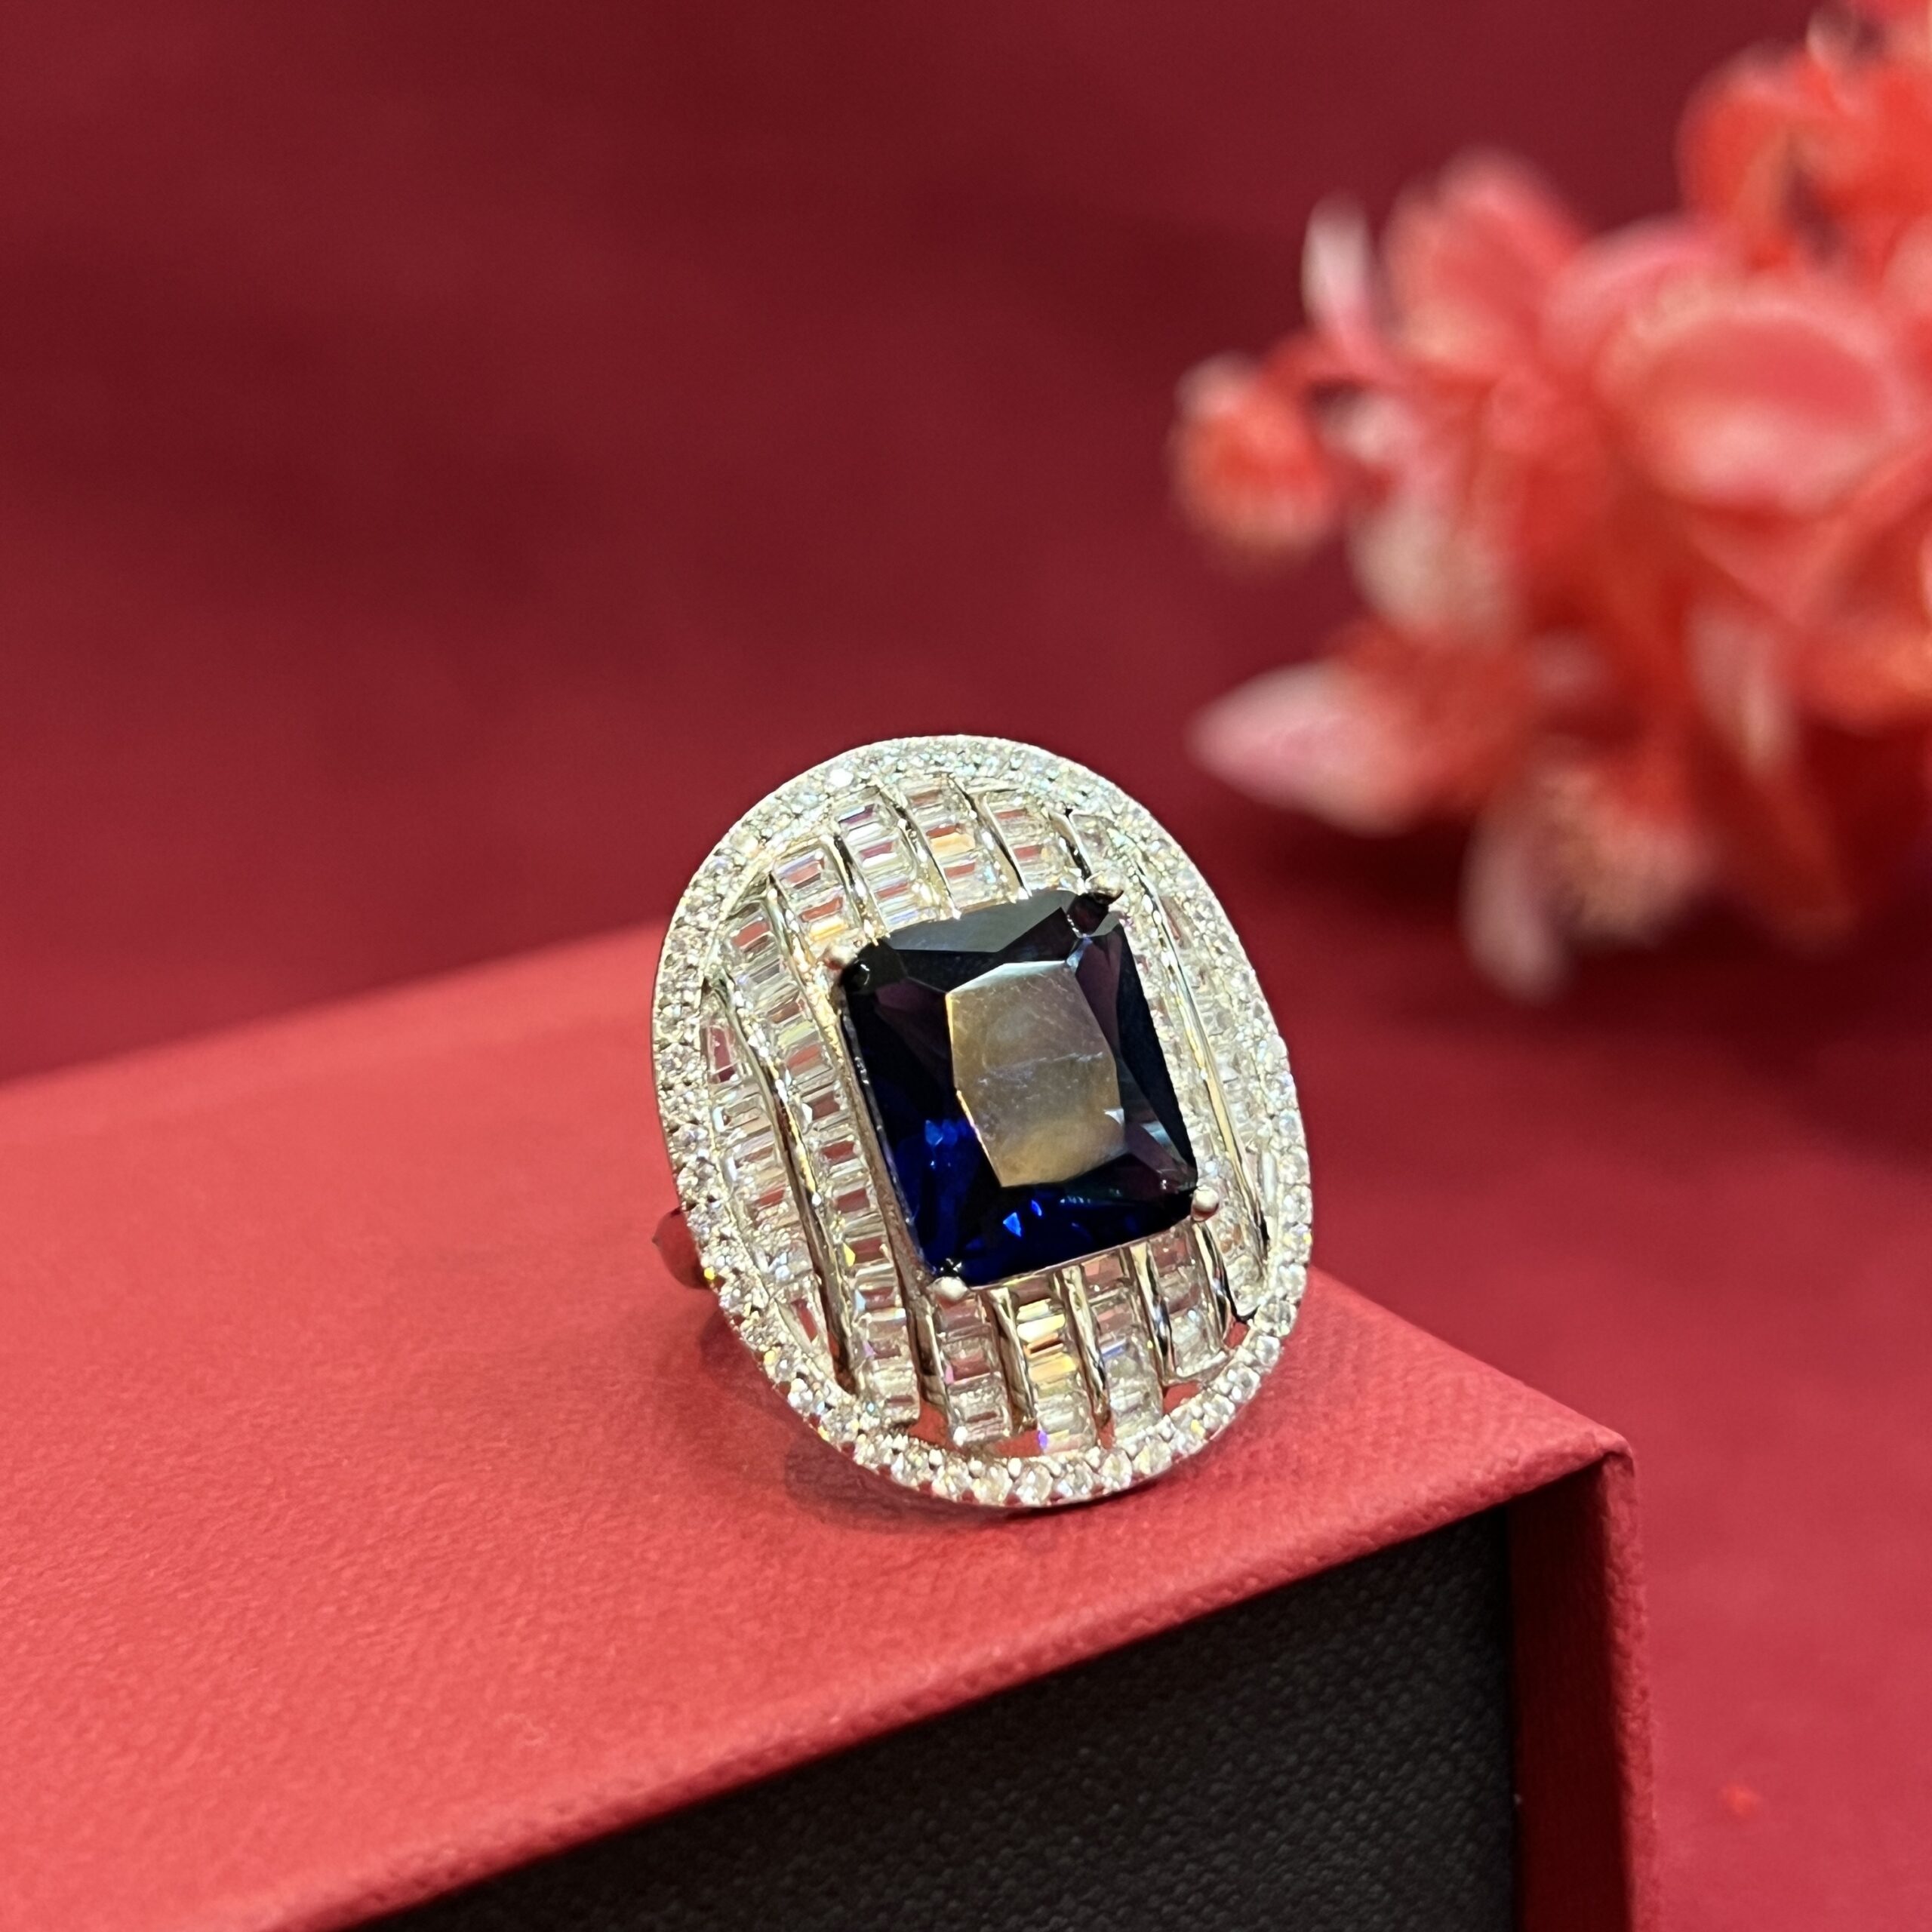 Buy 22Kt Plain Gold Italian Design Ladies Ring 93VD3856 Online from Vaibhav  Jewellers